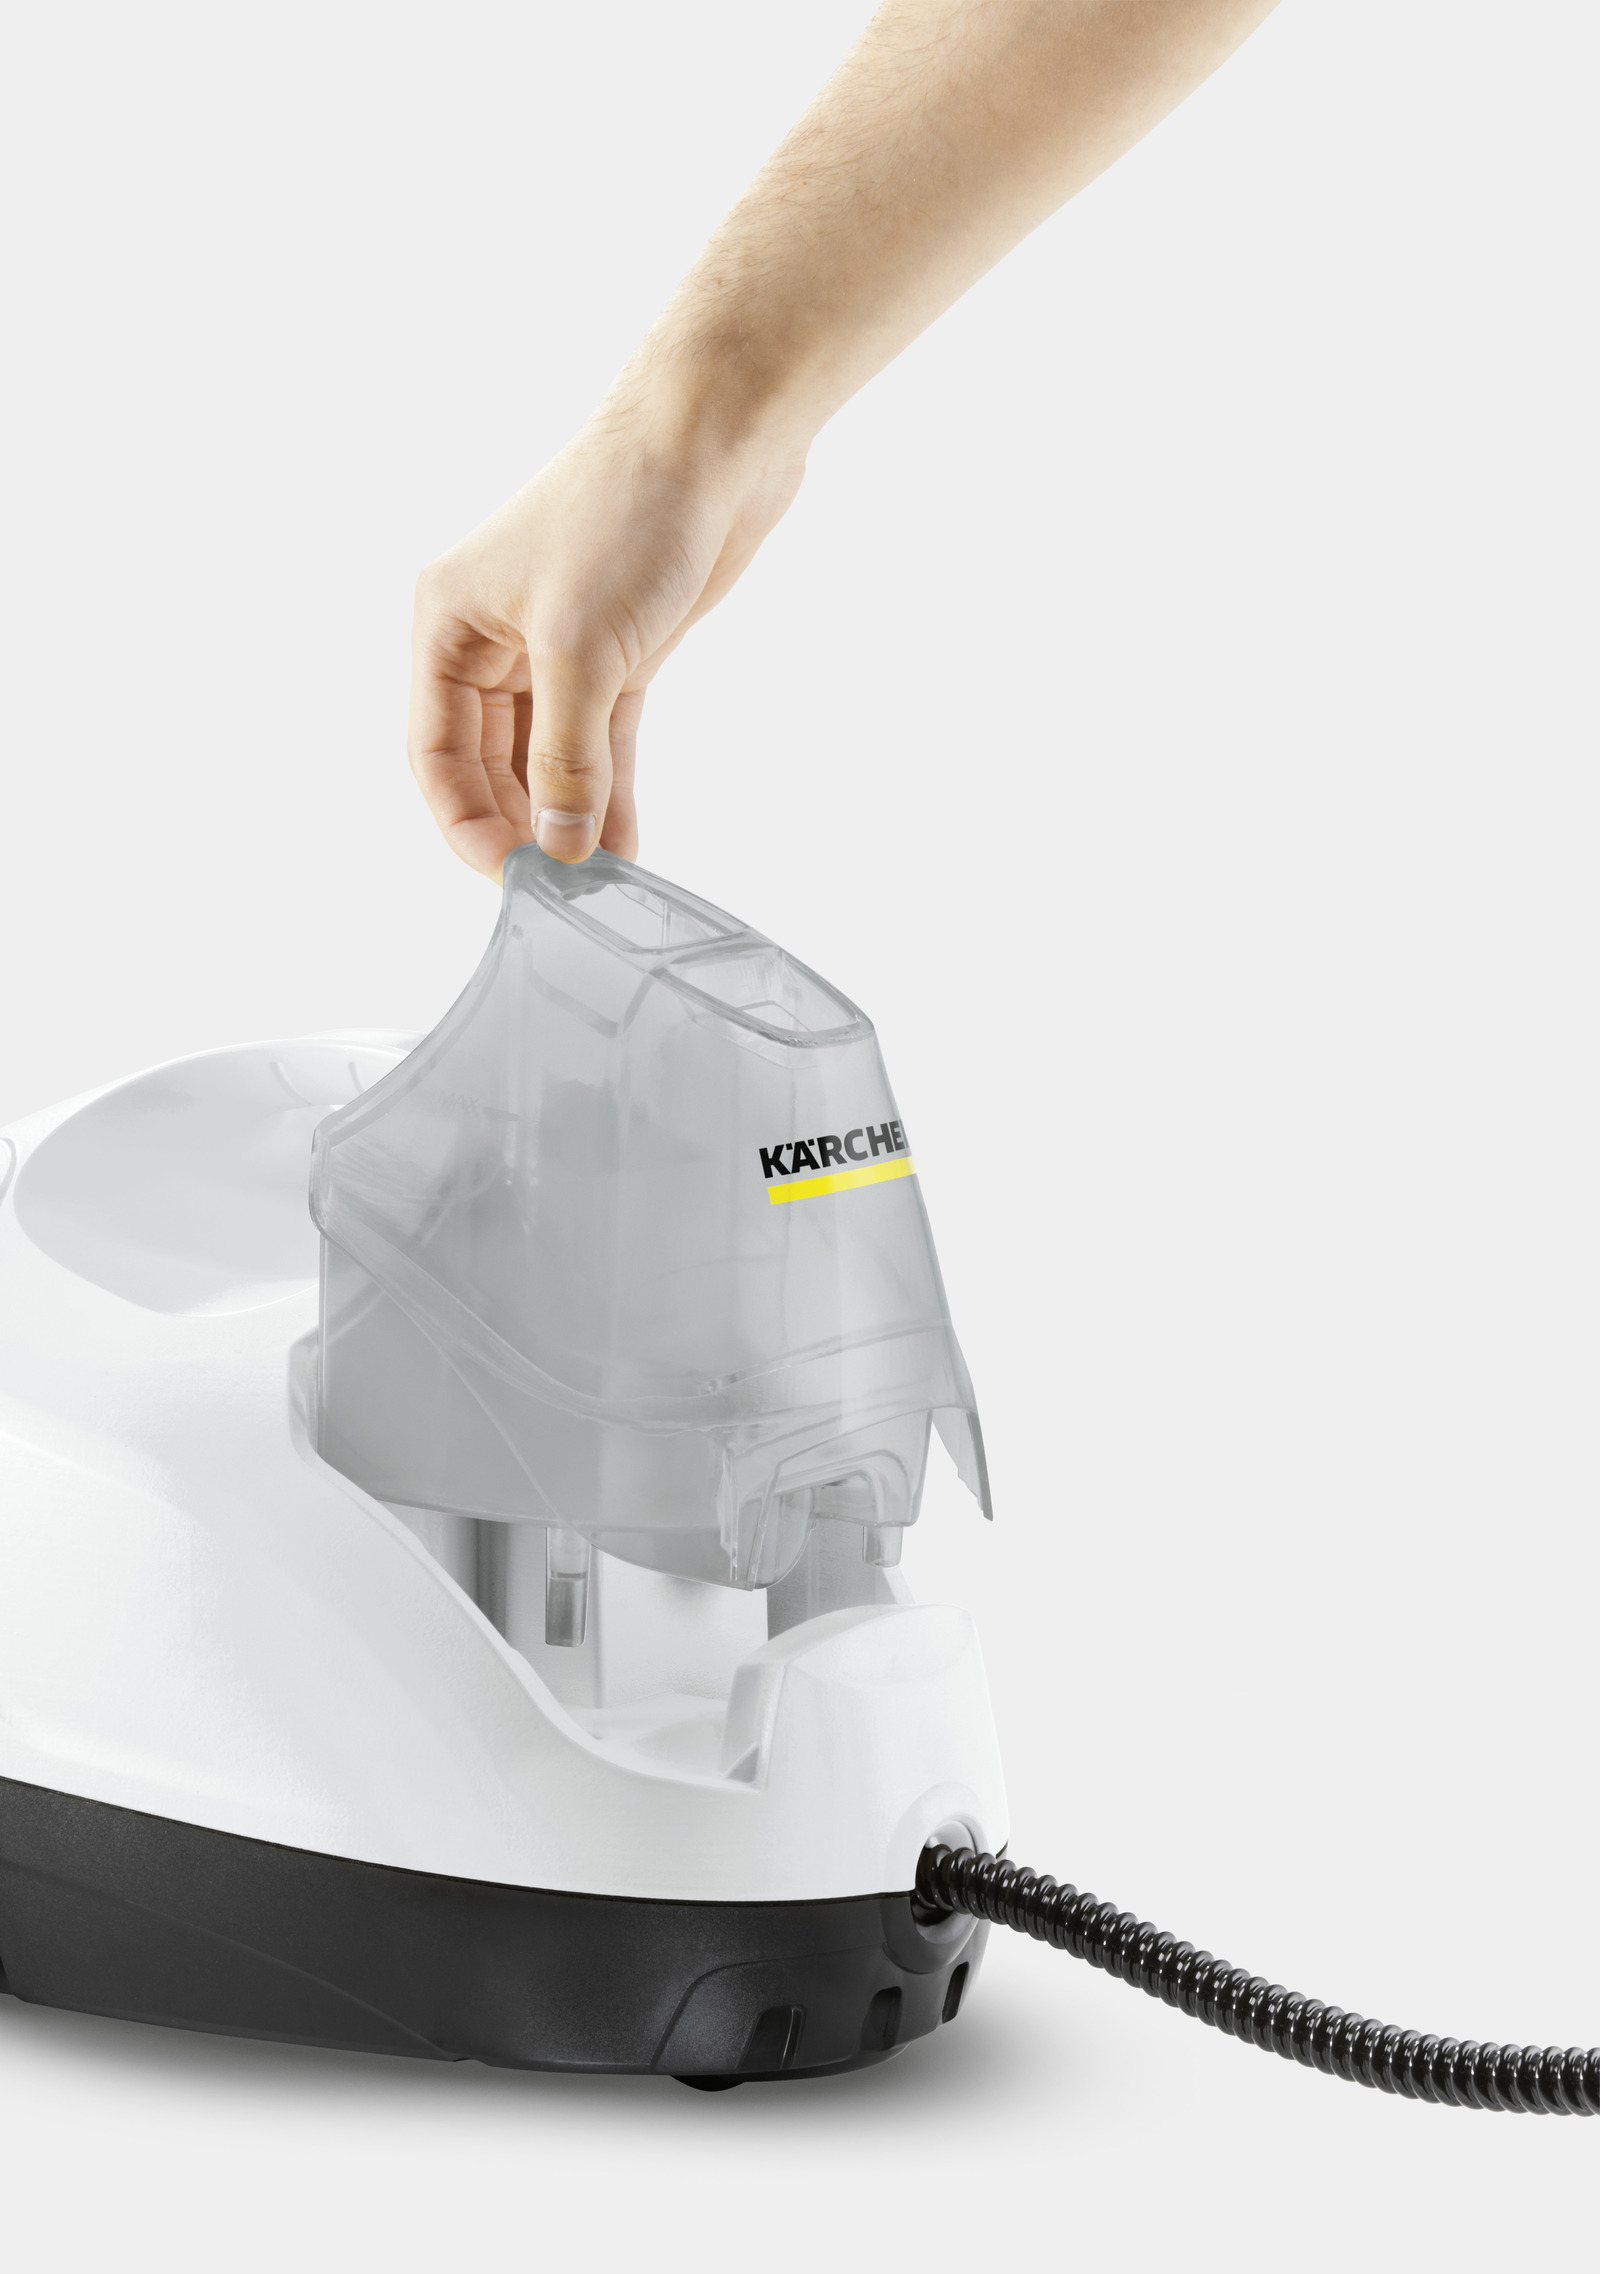 Limpiadora a vapor sin detergentes SC 4 Premium Karcher